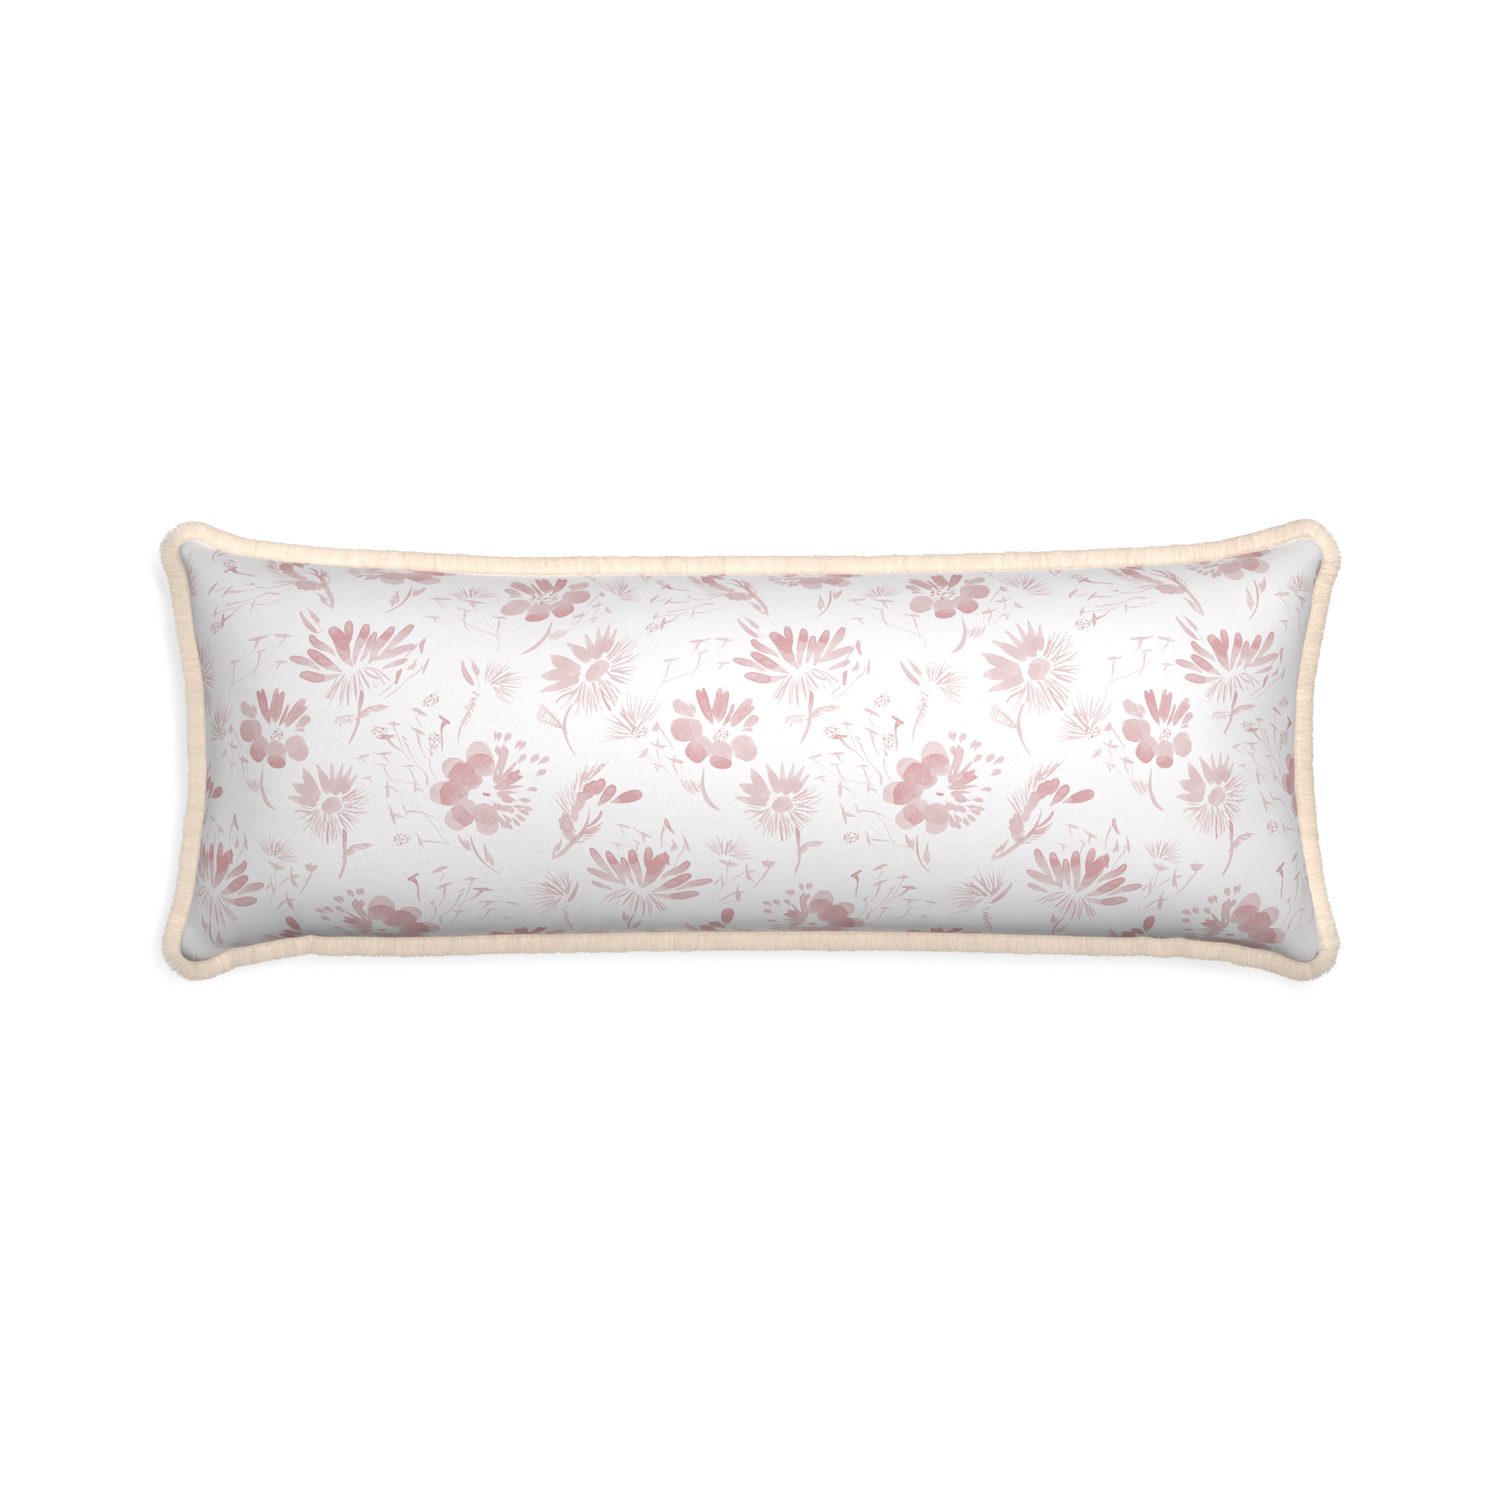 Xl-lumbar blake custom pillow with cream fringe on white background